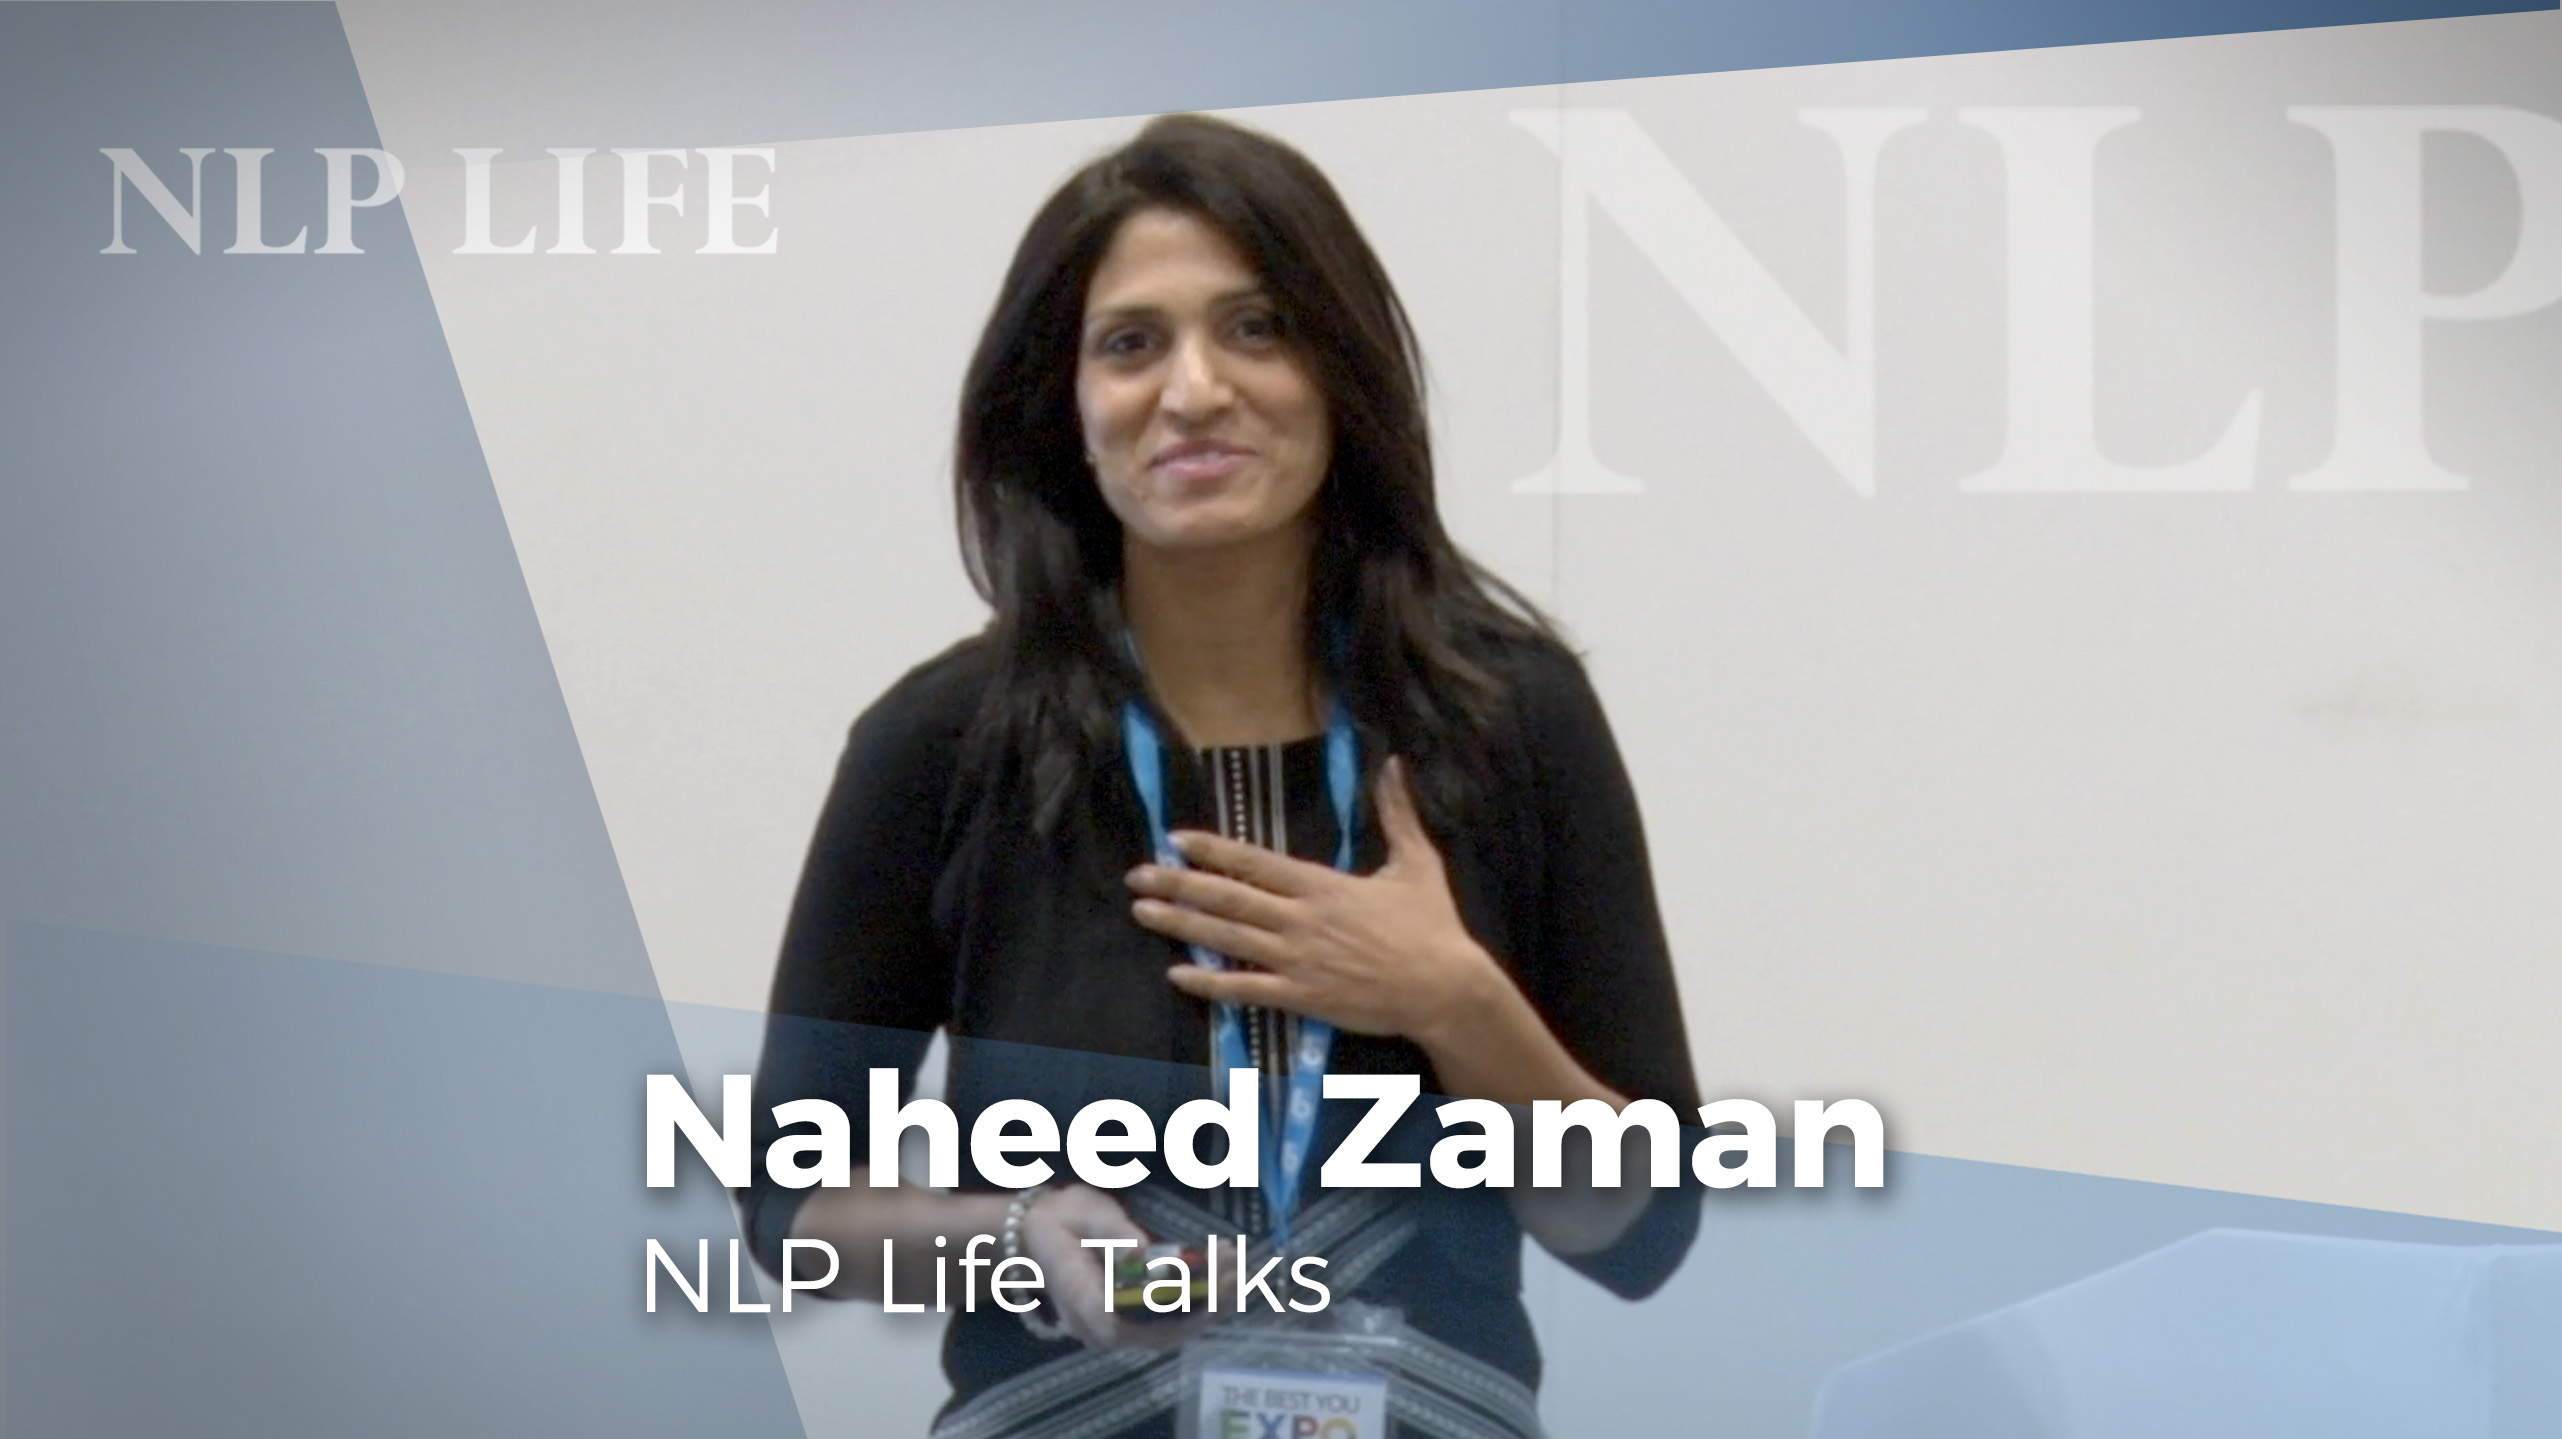 Naheed Zaman's NLP Life Talk